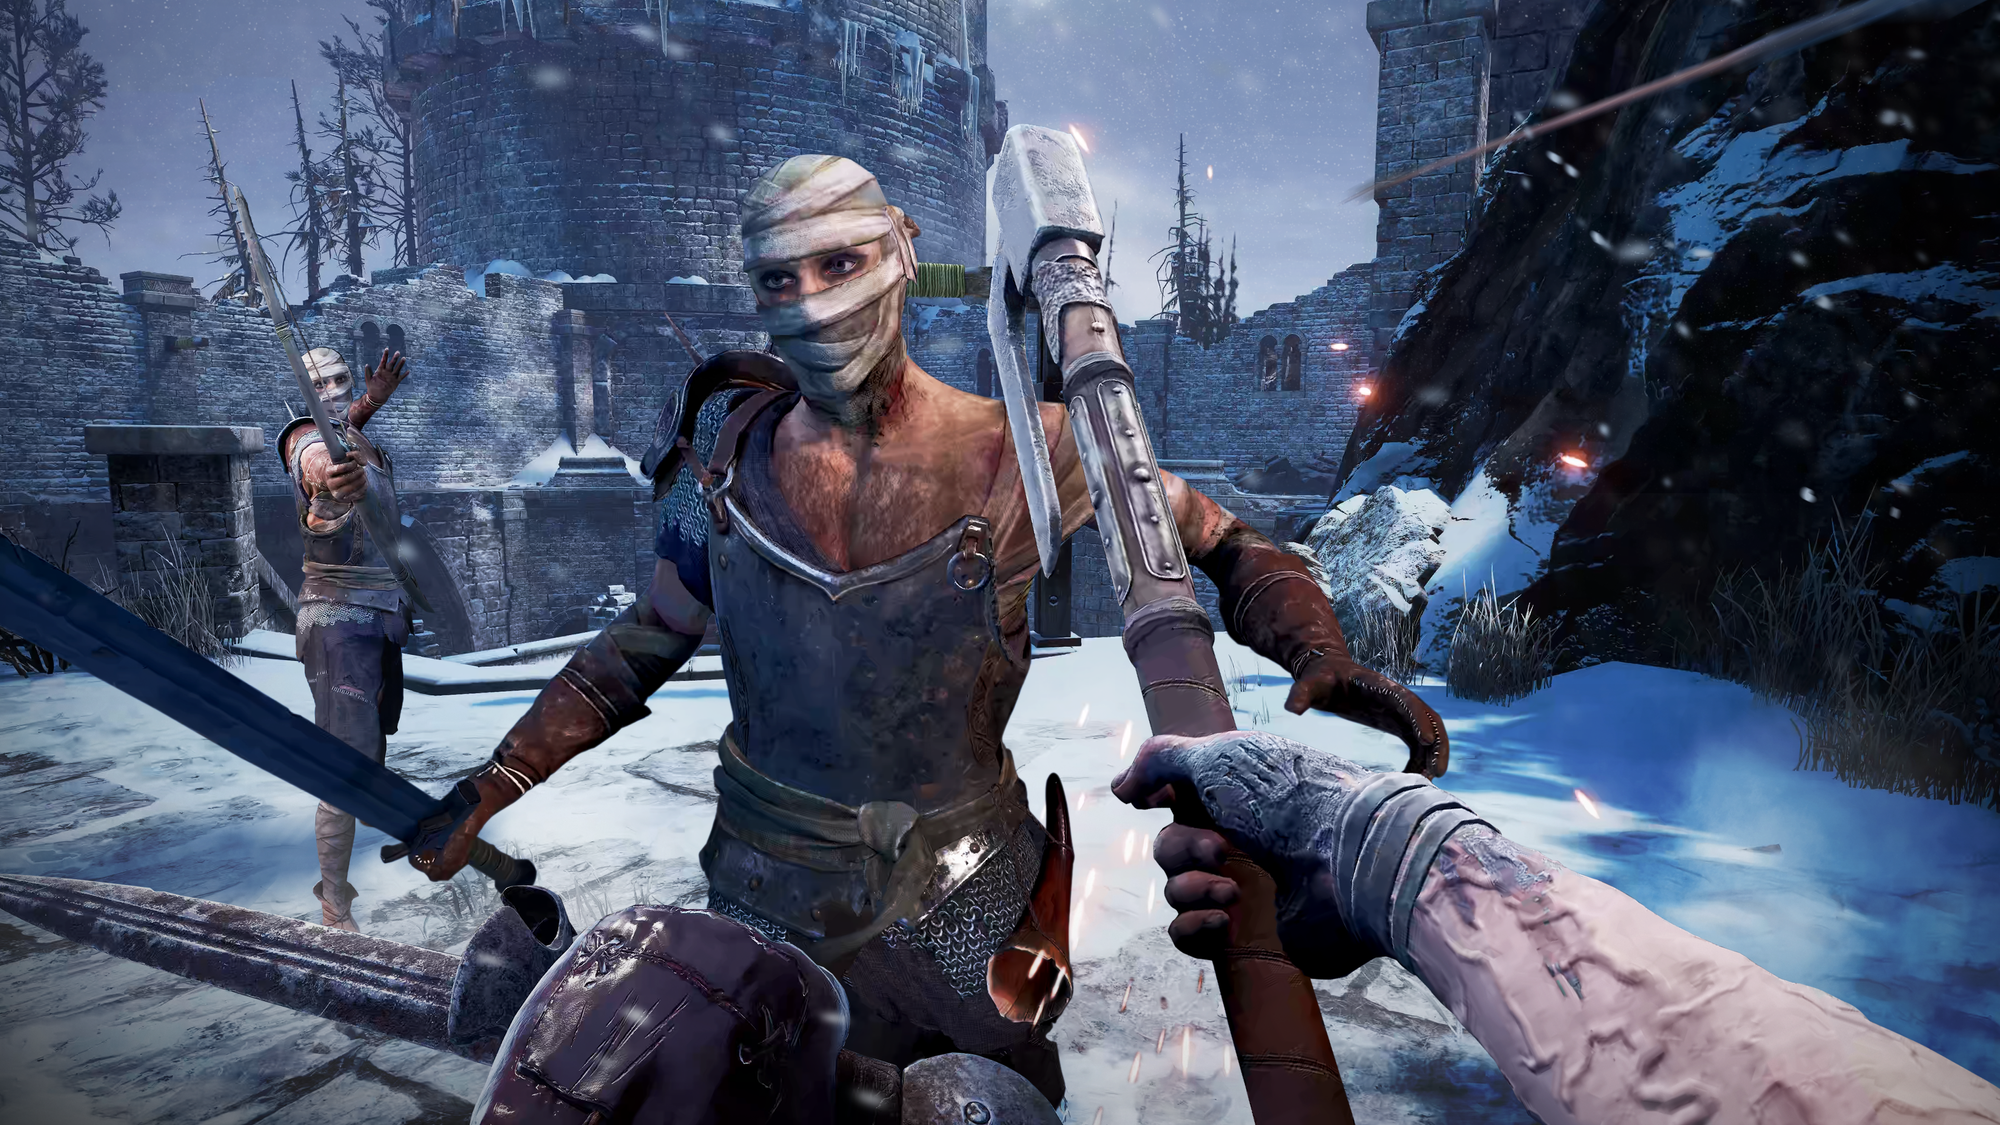 Behemoth VR screenshot, bandaged enemy being hit by an axe